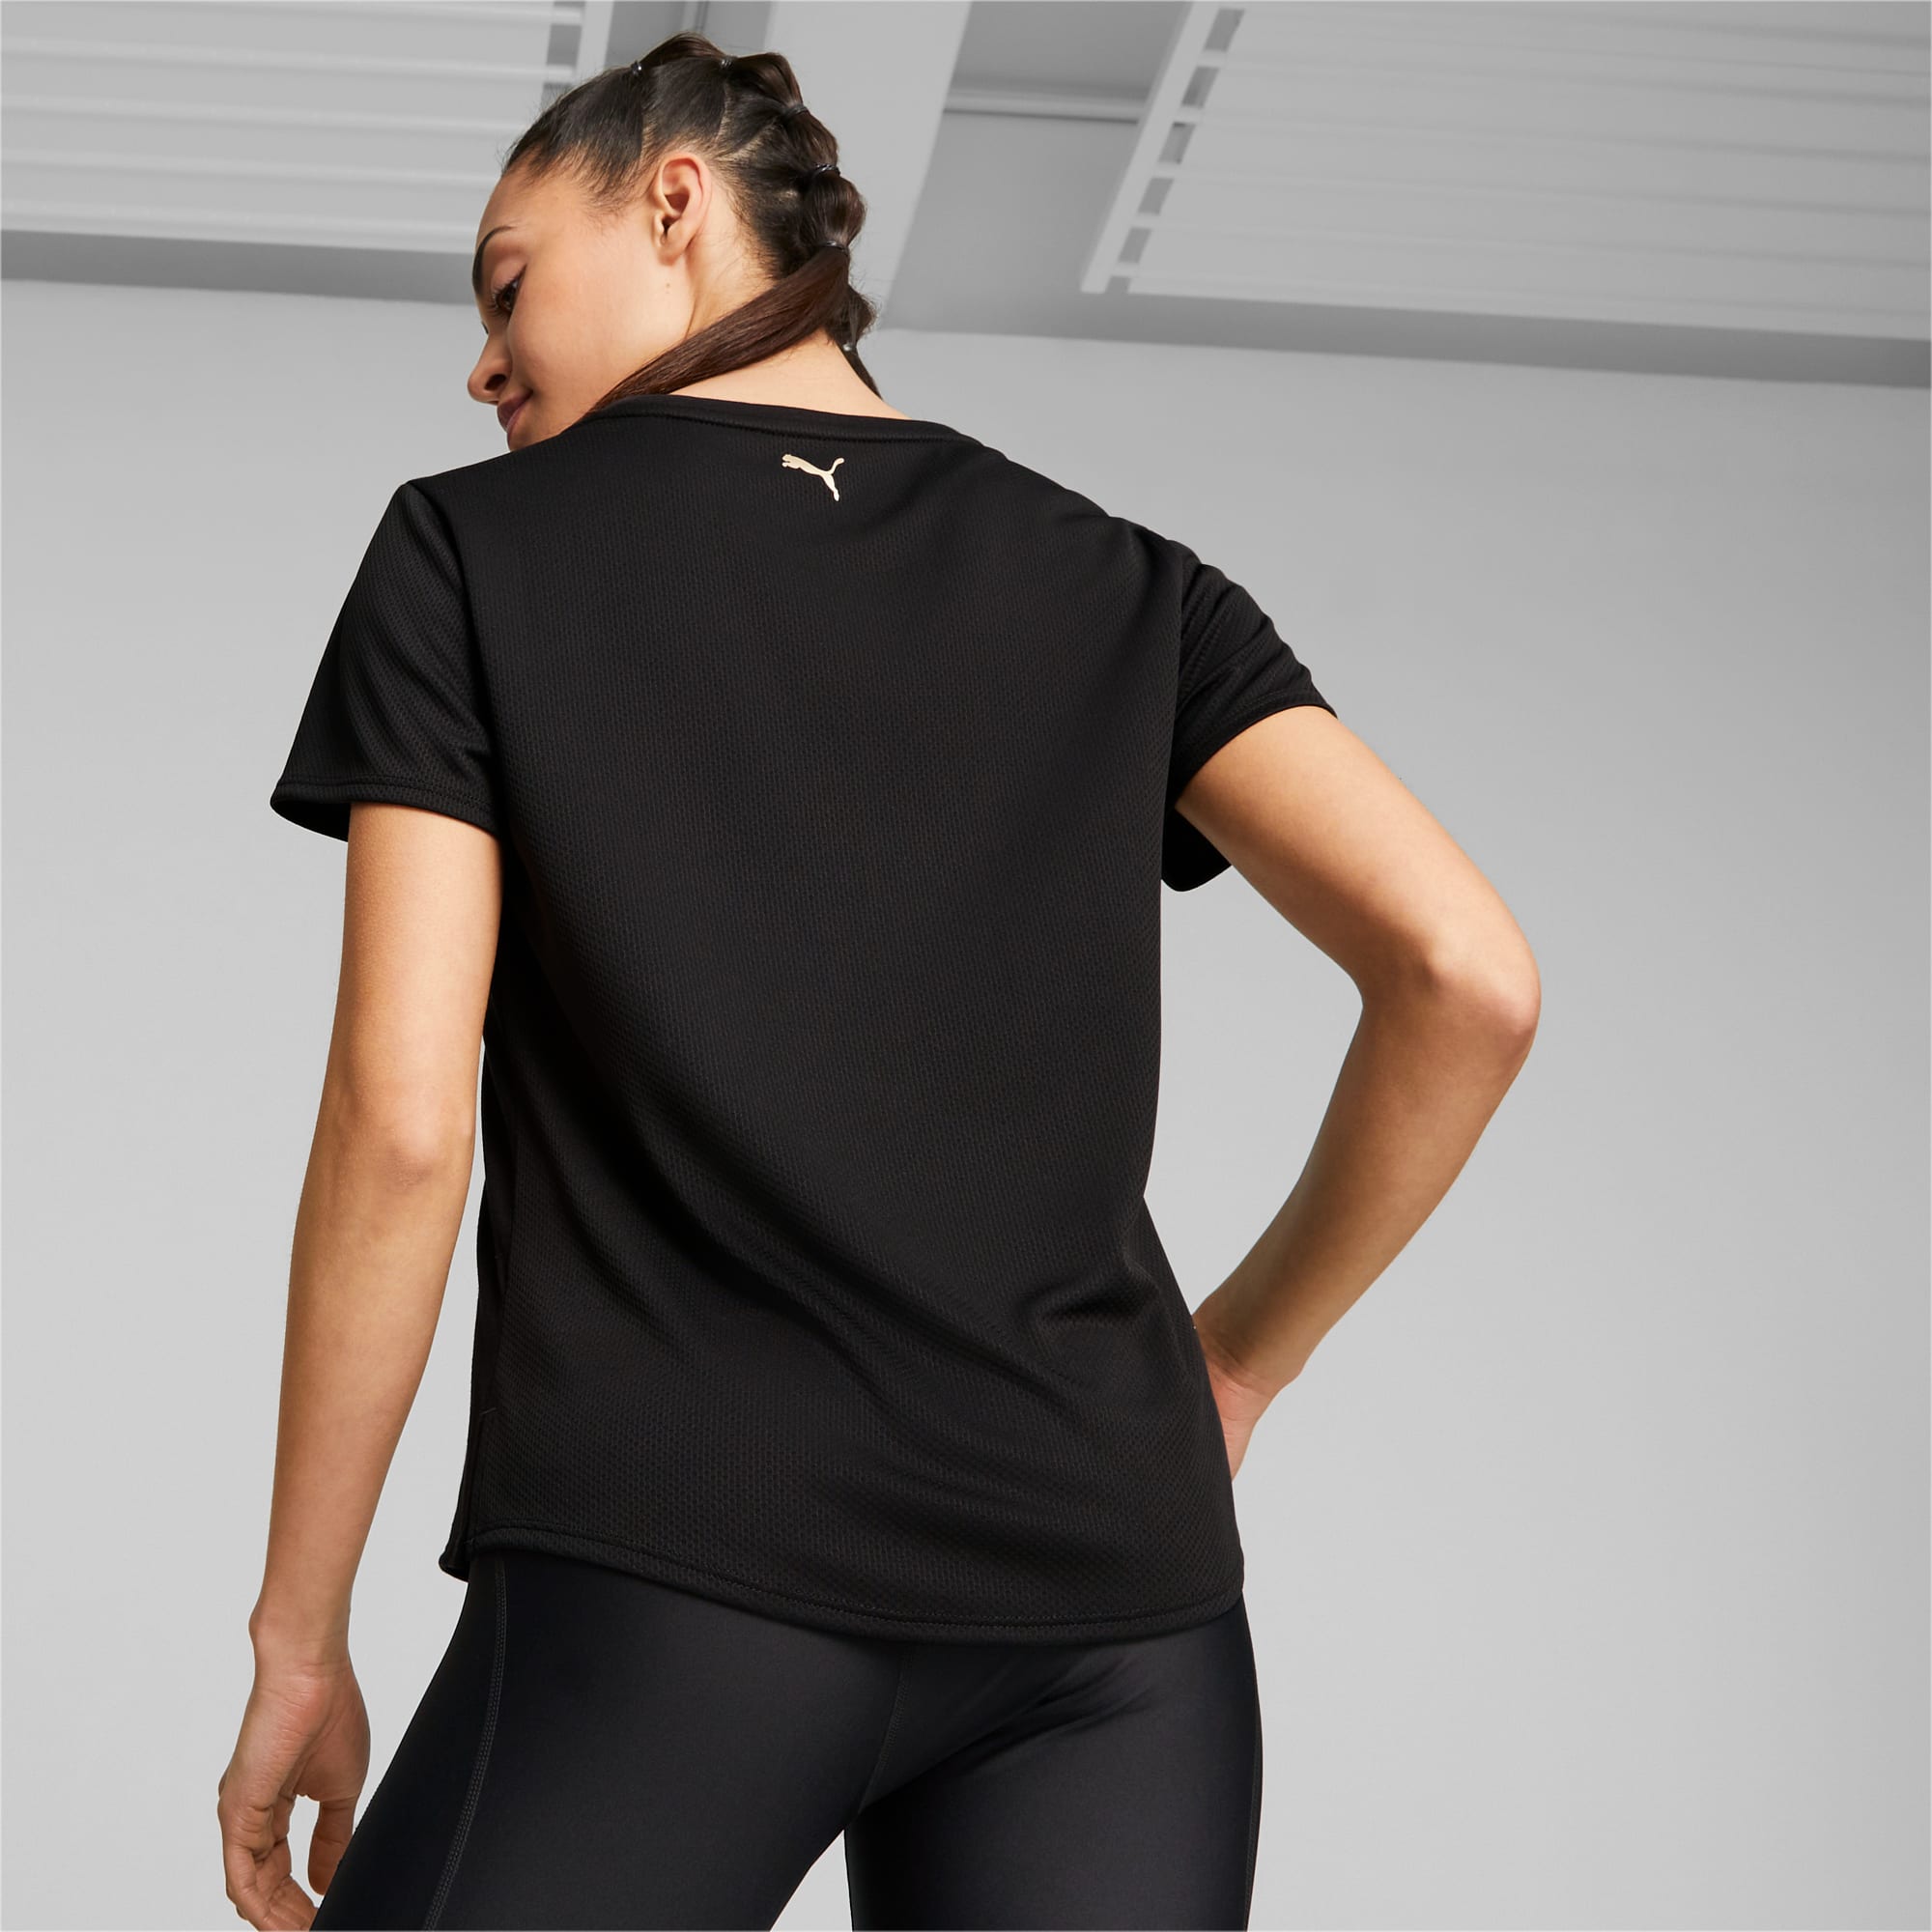 PUMA FIT Ultrabreathe Trainings-T-Shirt Damen, Schwarz/Gold, Größe: S, Kleidung